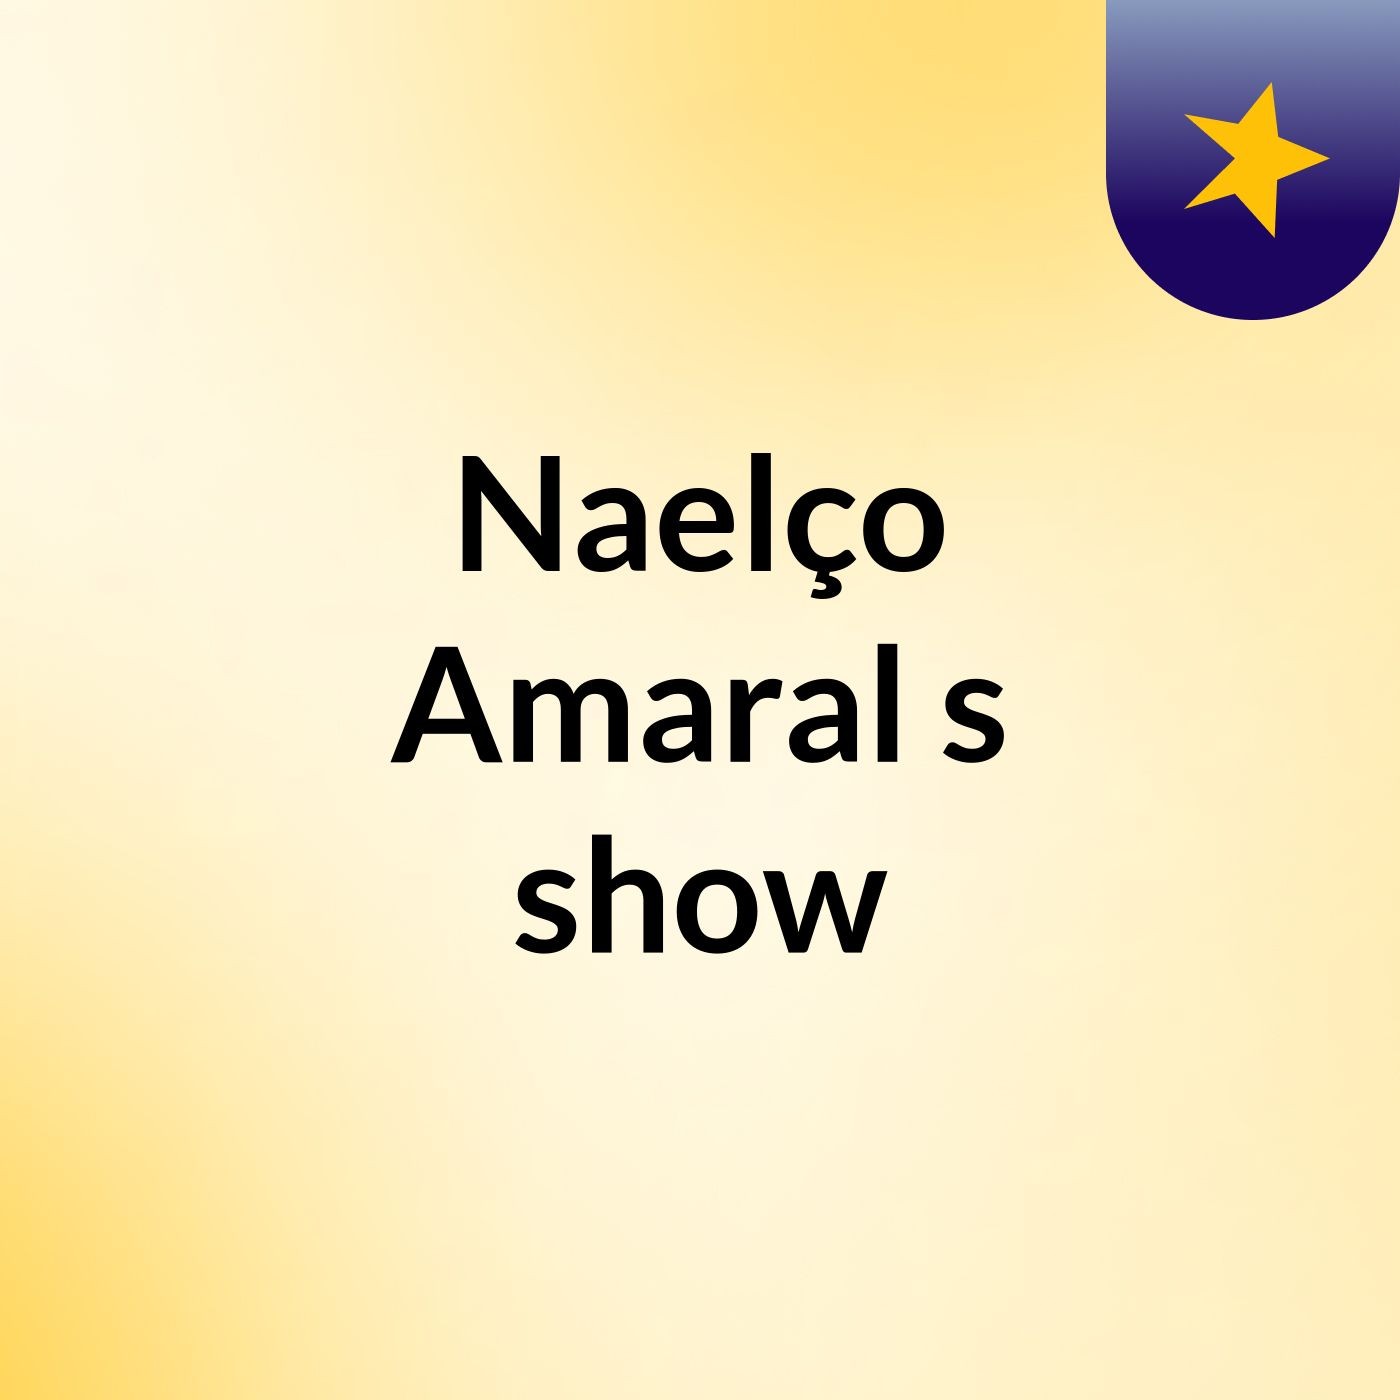 Naelço Amaral's show